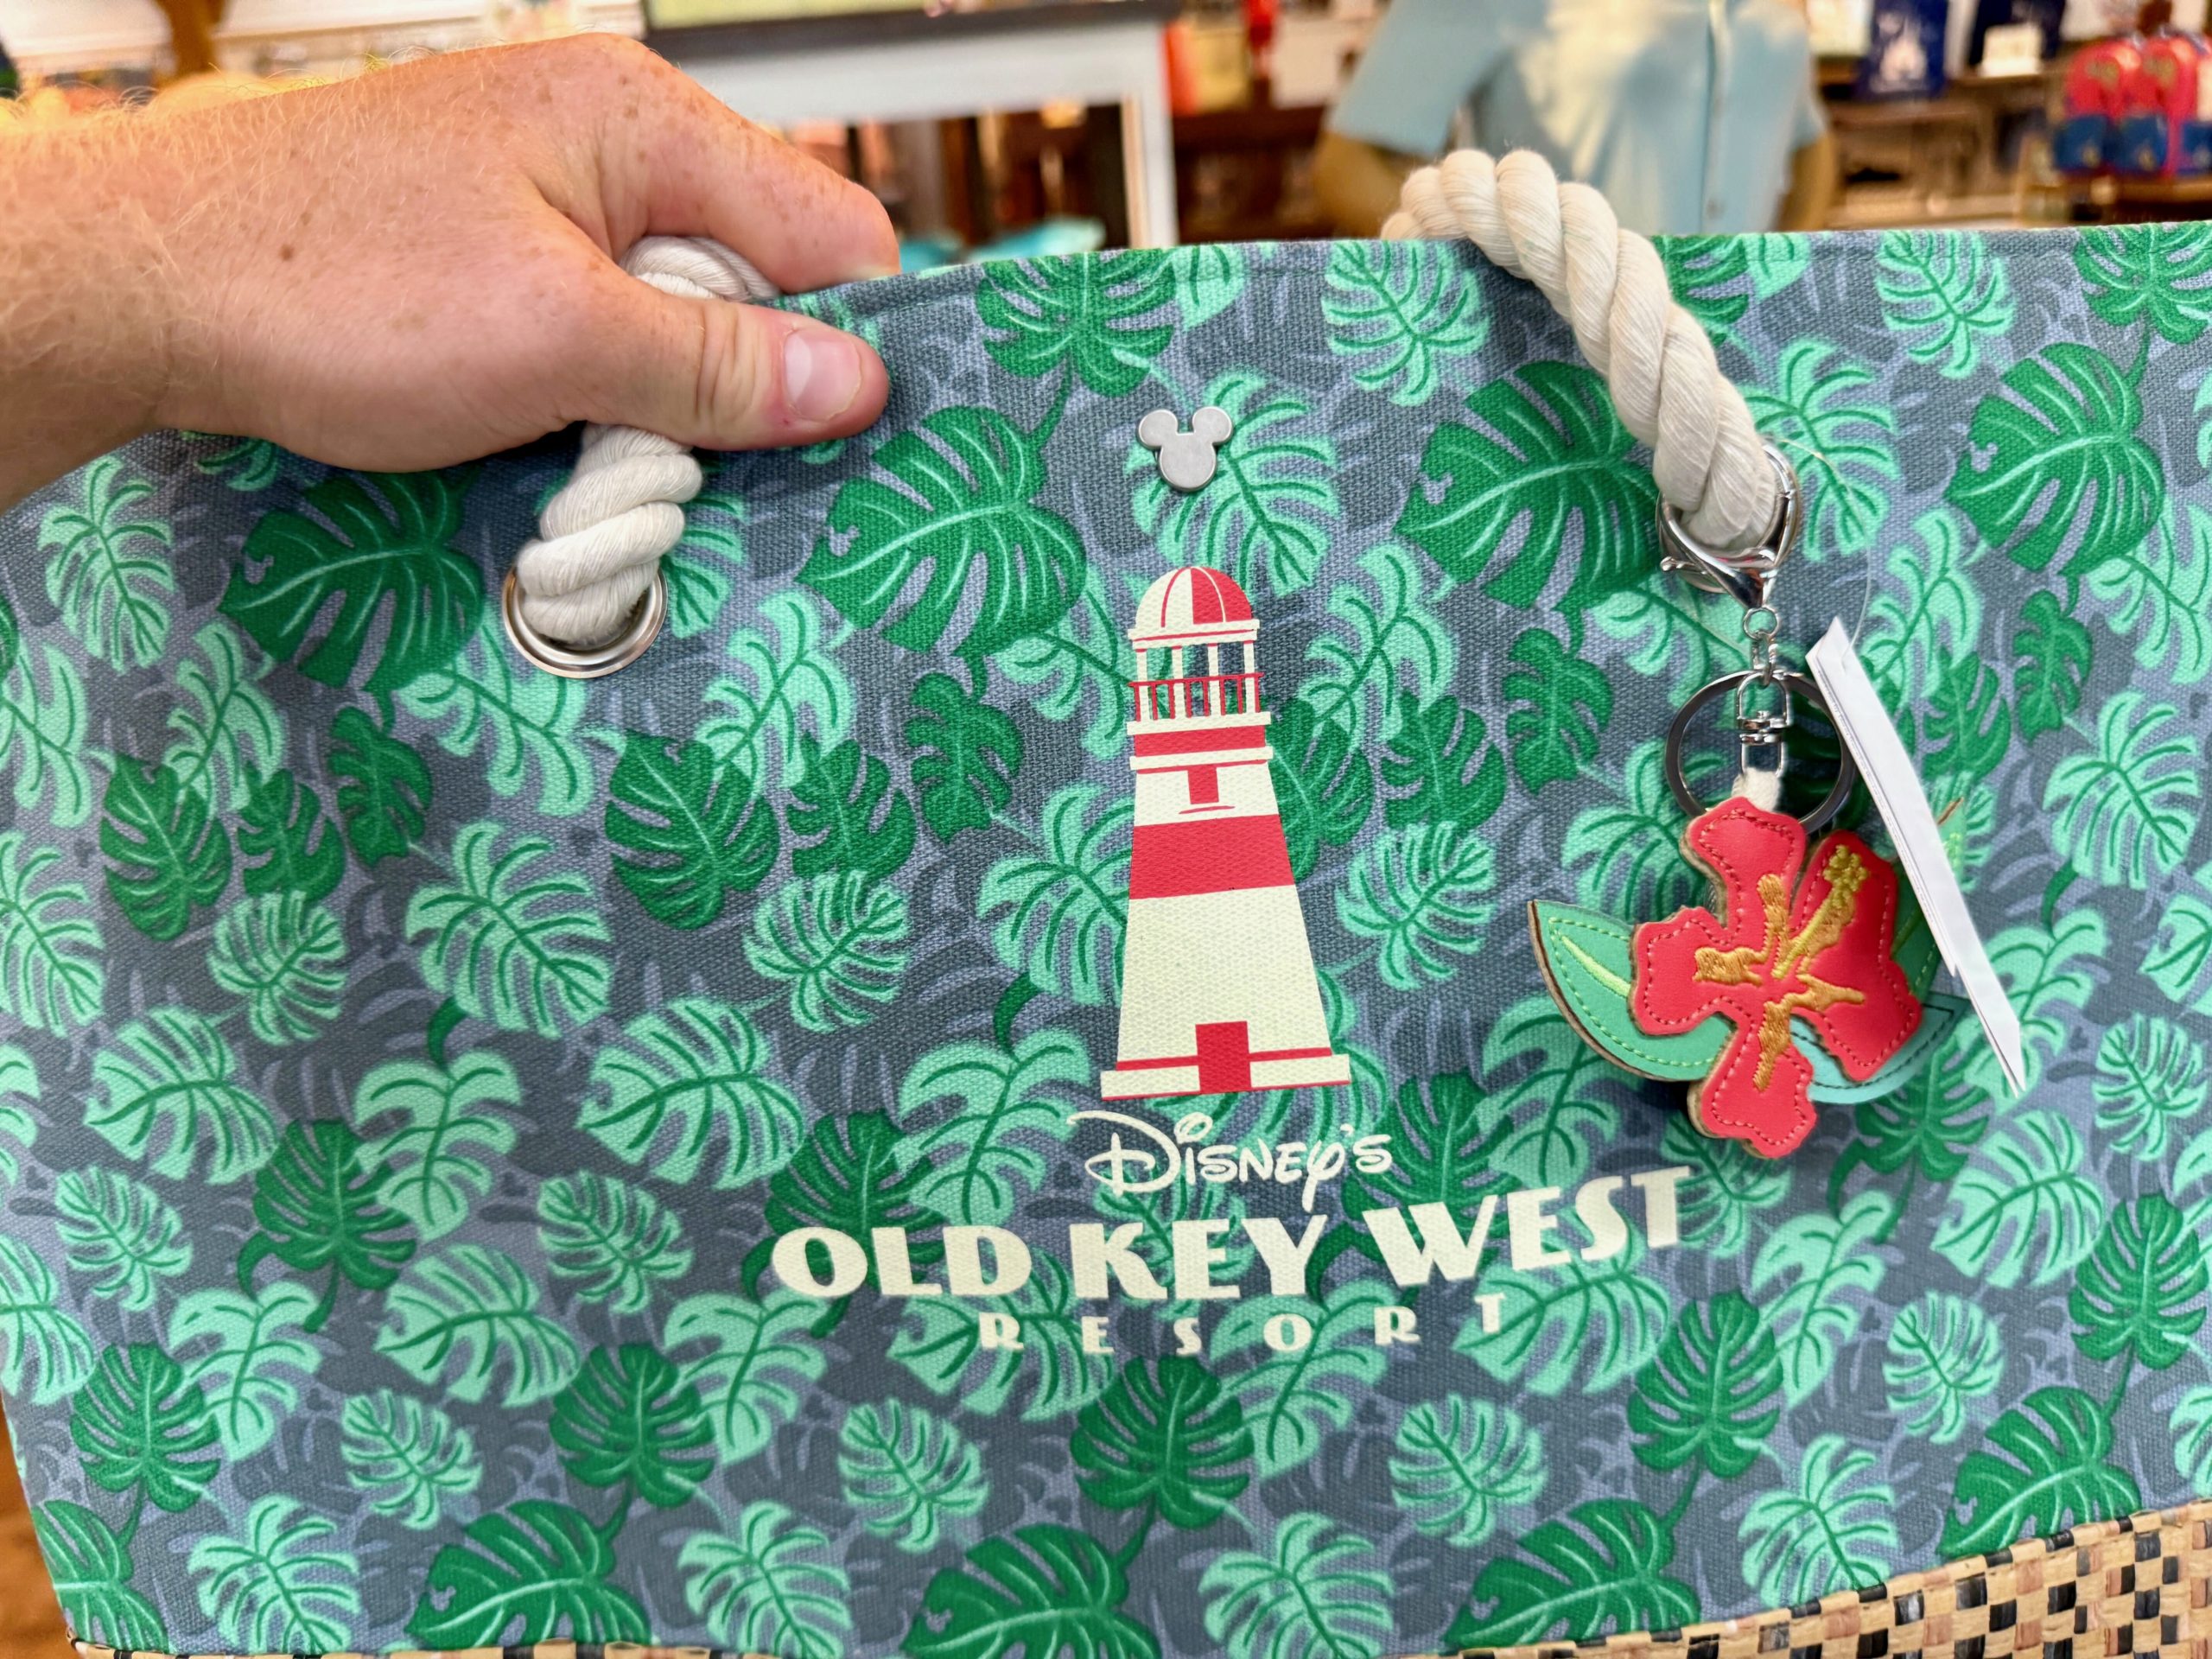 Old Key West Merchandise